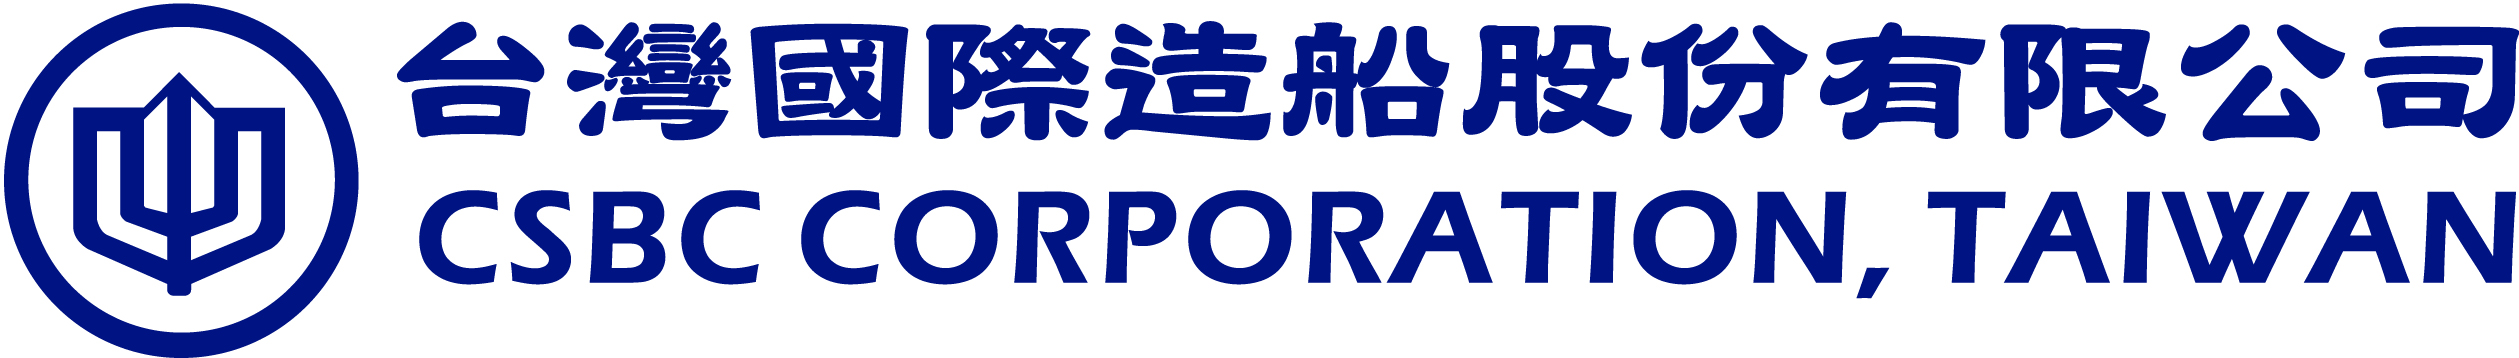 CSBC Corporation, Taiwan-Logo